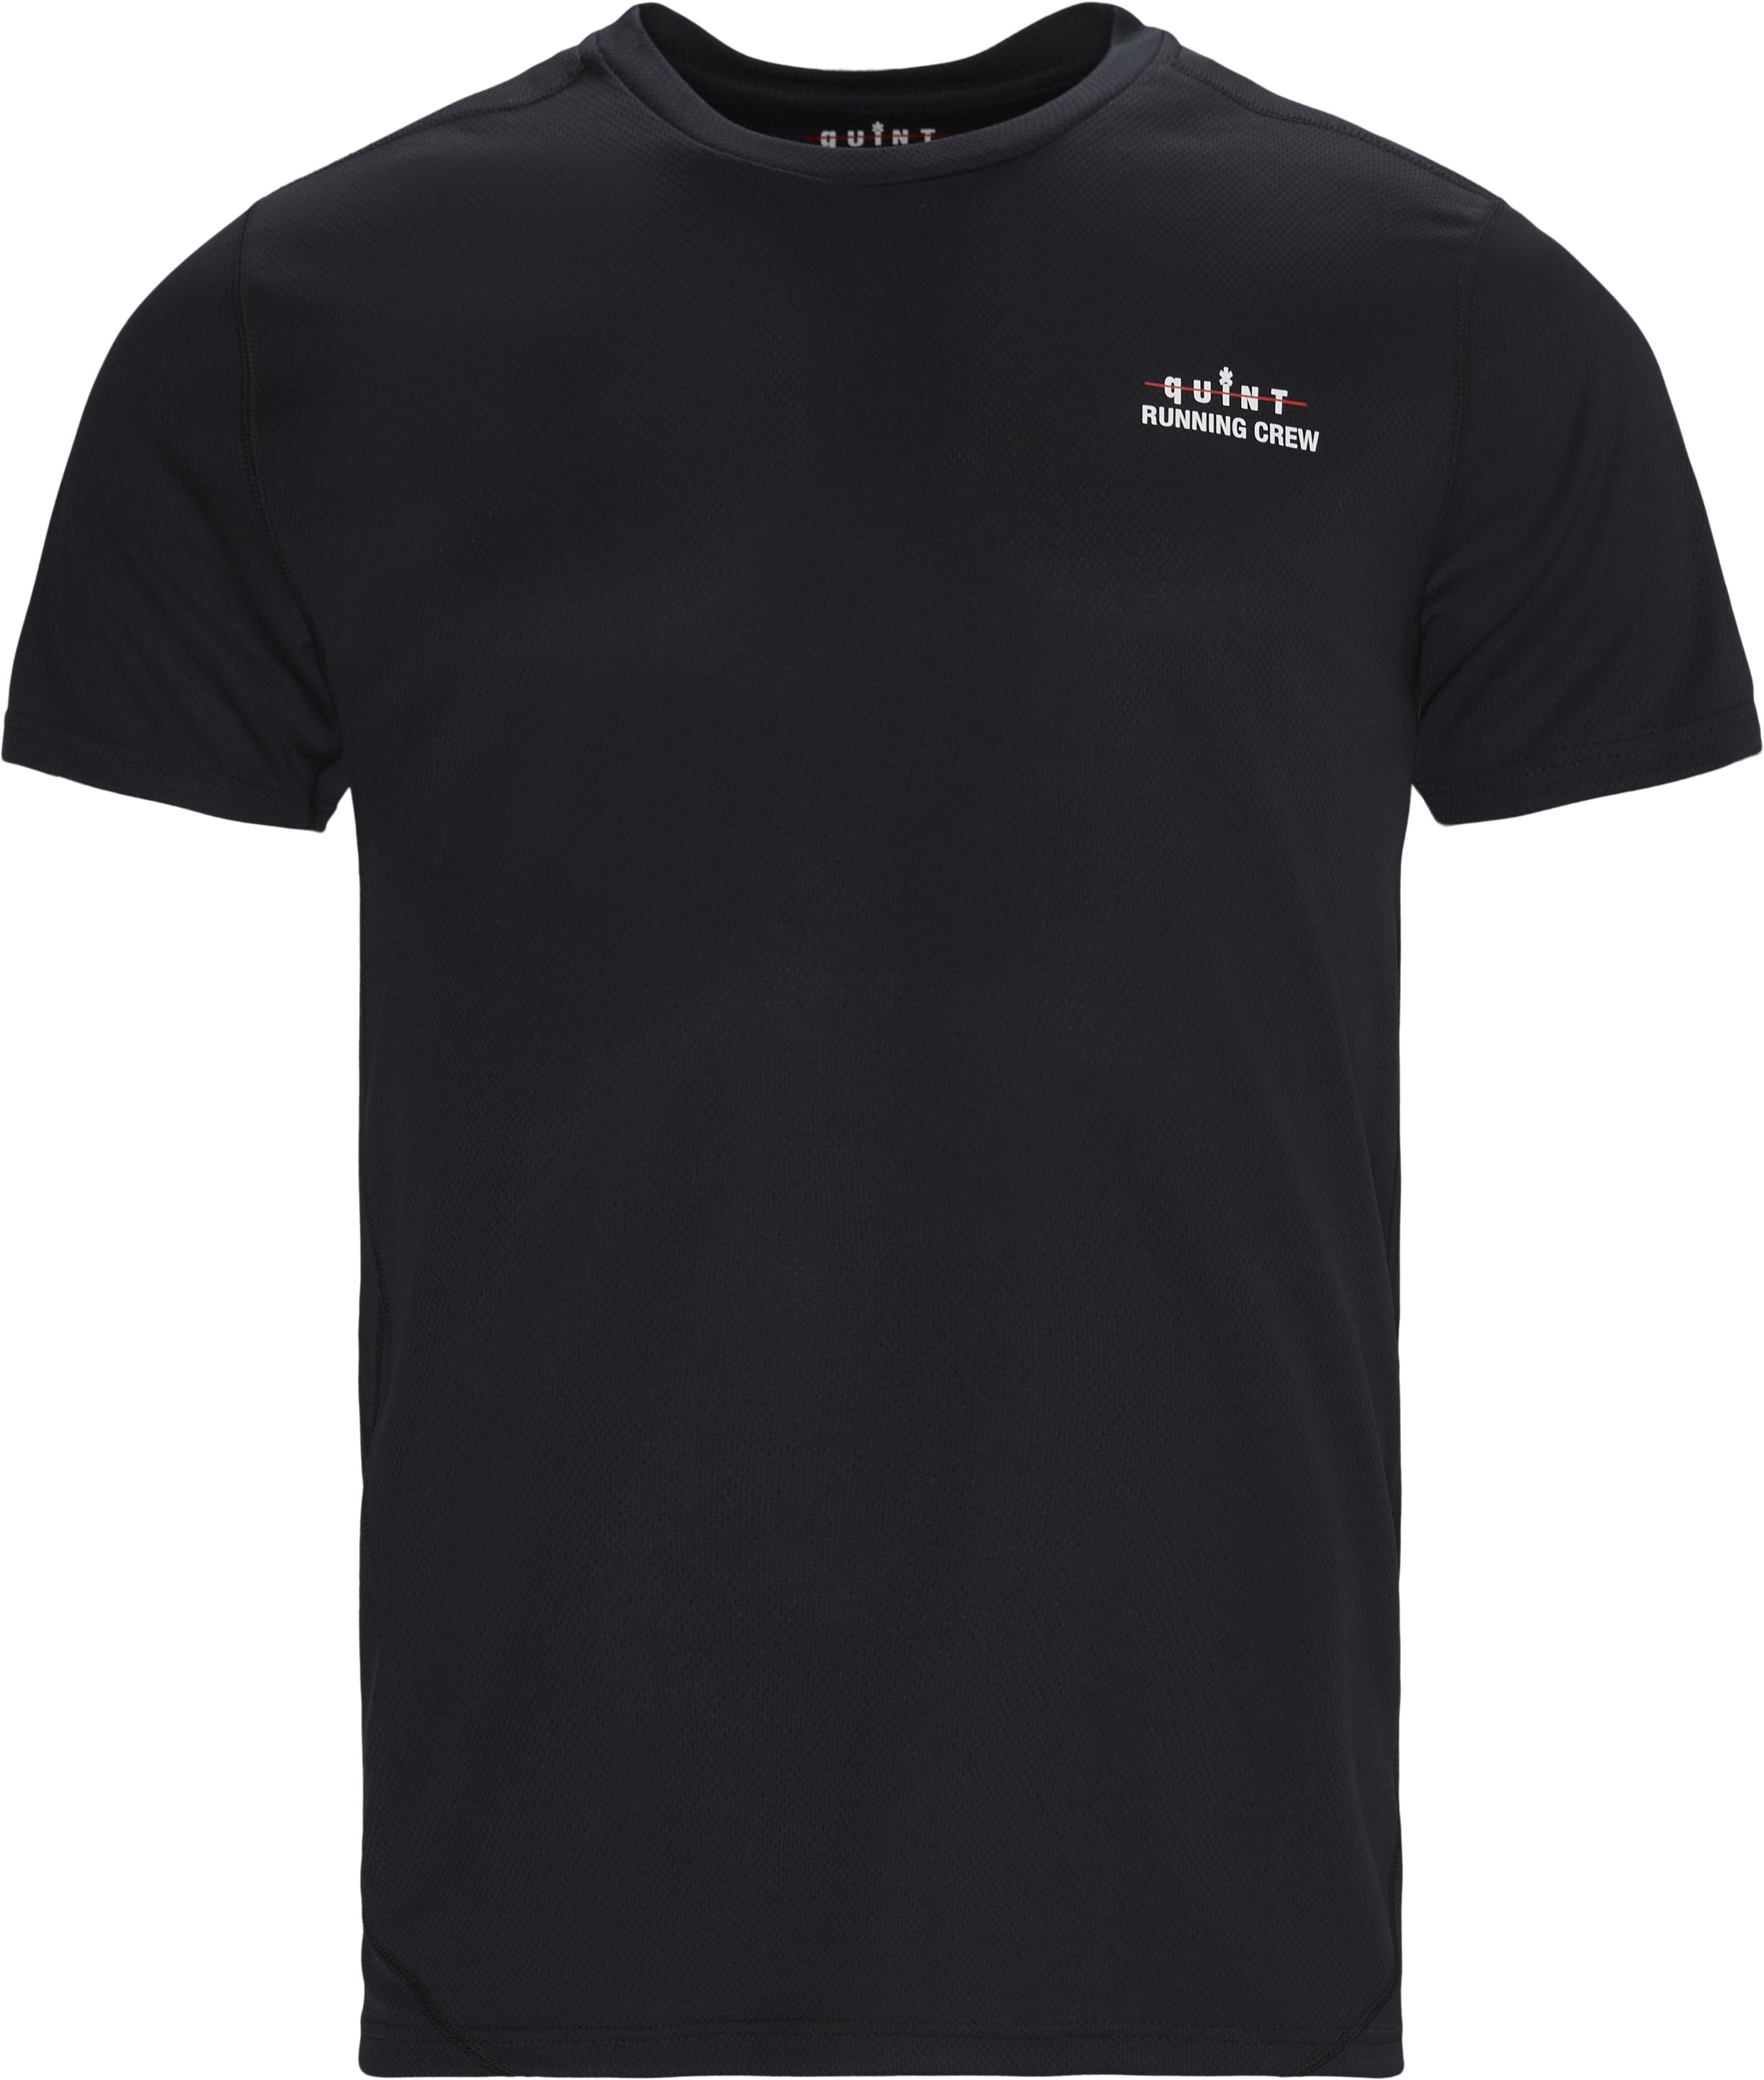 Quint Running Crew Troy Tee - T-shirts - Regular fit - Black